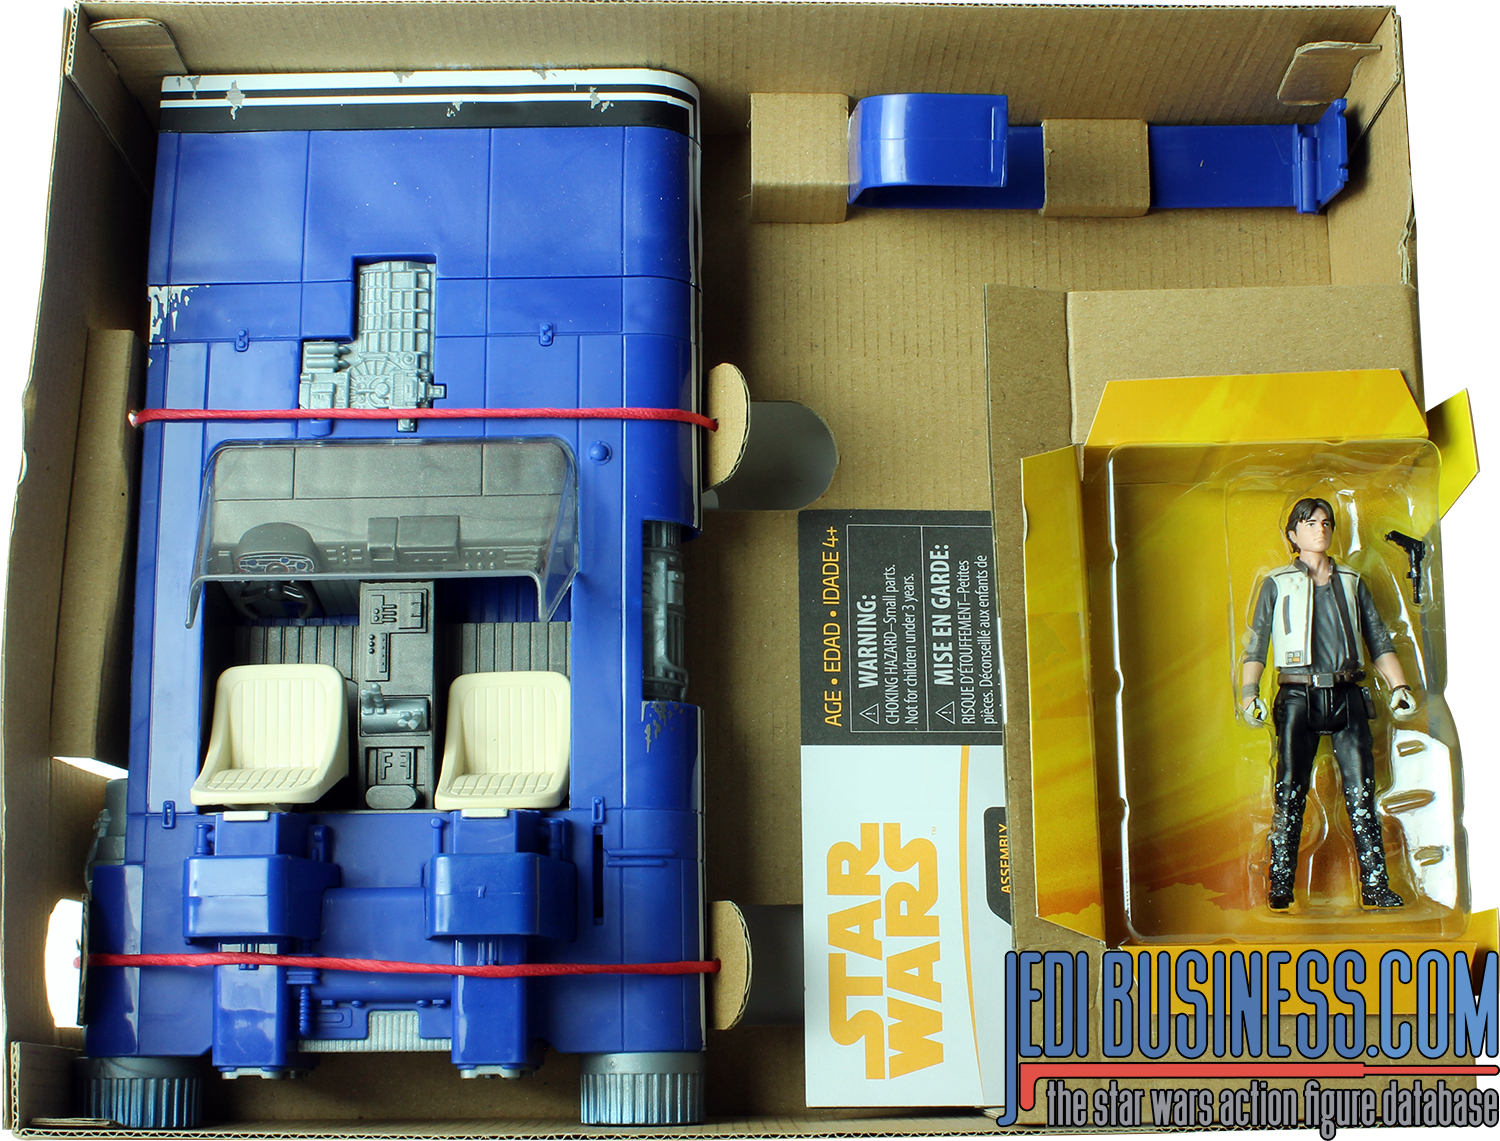 Han Solo With M-68 Landspeeder